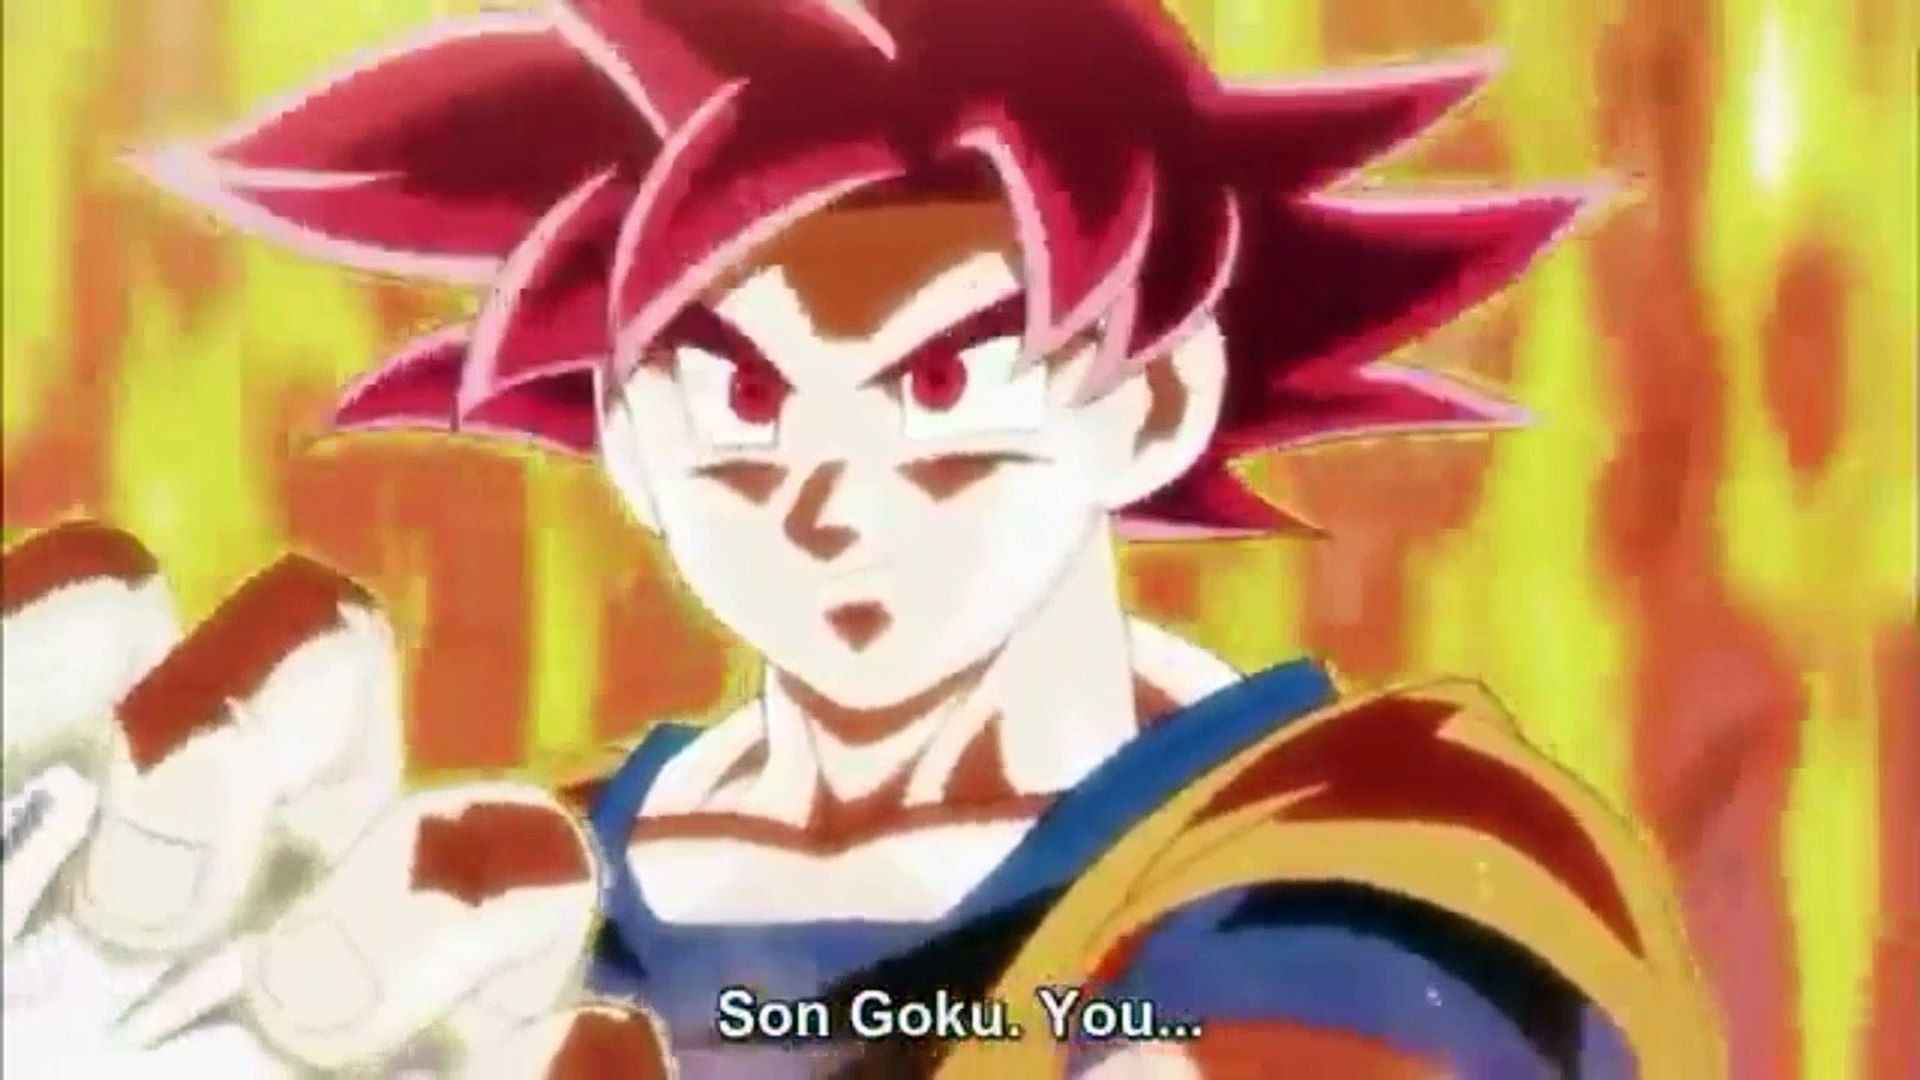 Super Saiyan God Son Gokus Badass entry- Dragon Ball Super (English Sub) -  video Dailymotion